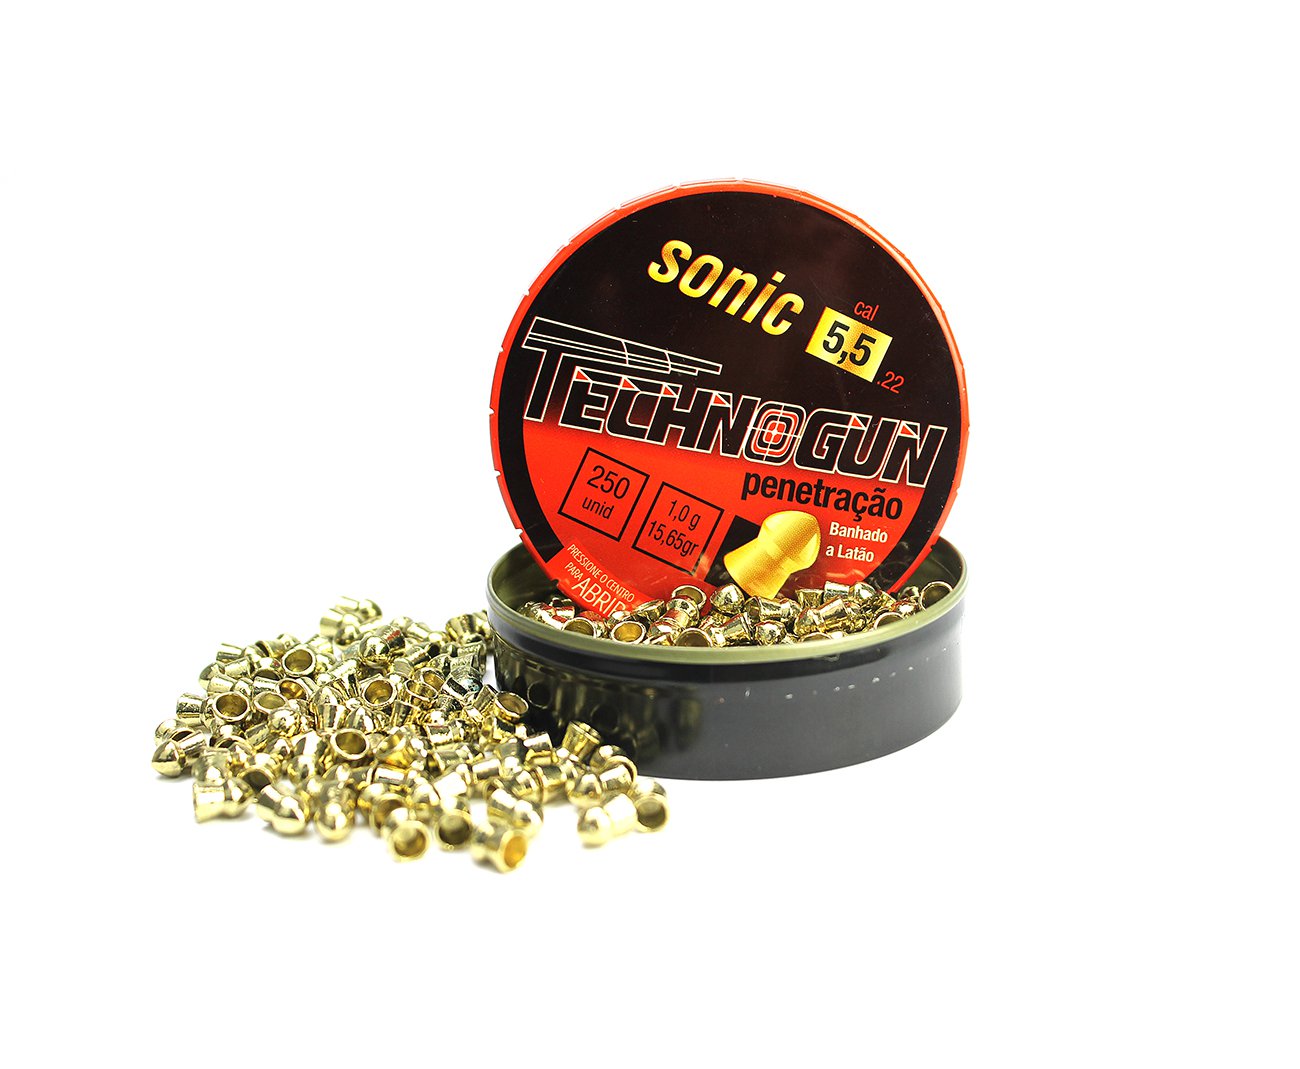 Chumbinho Sonic Gold Latonado - Calibre 5,5 Mm - Com 250 Unid - Technogun